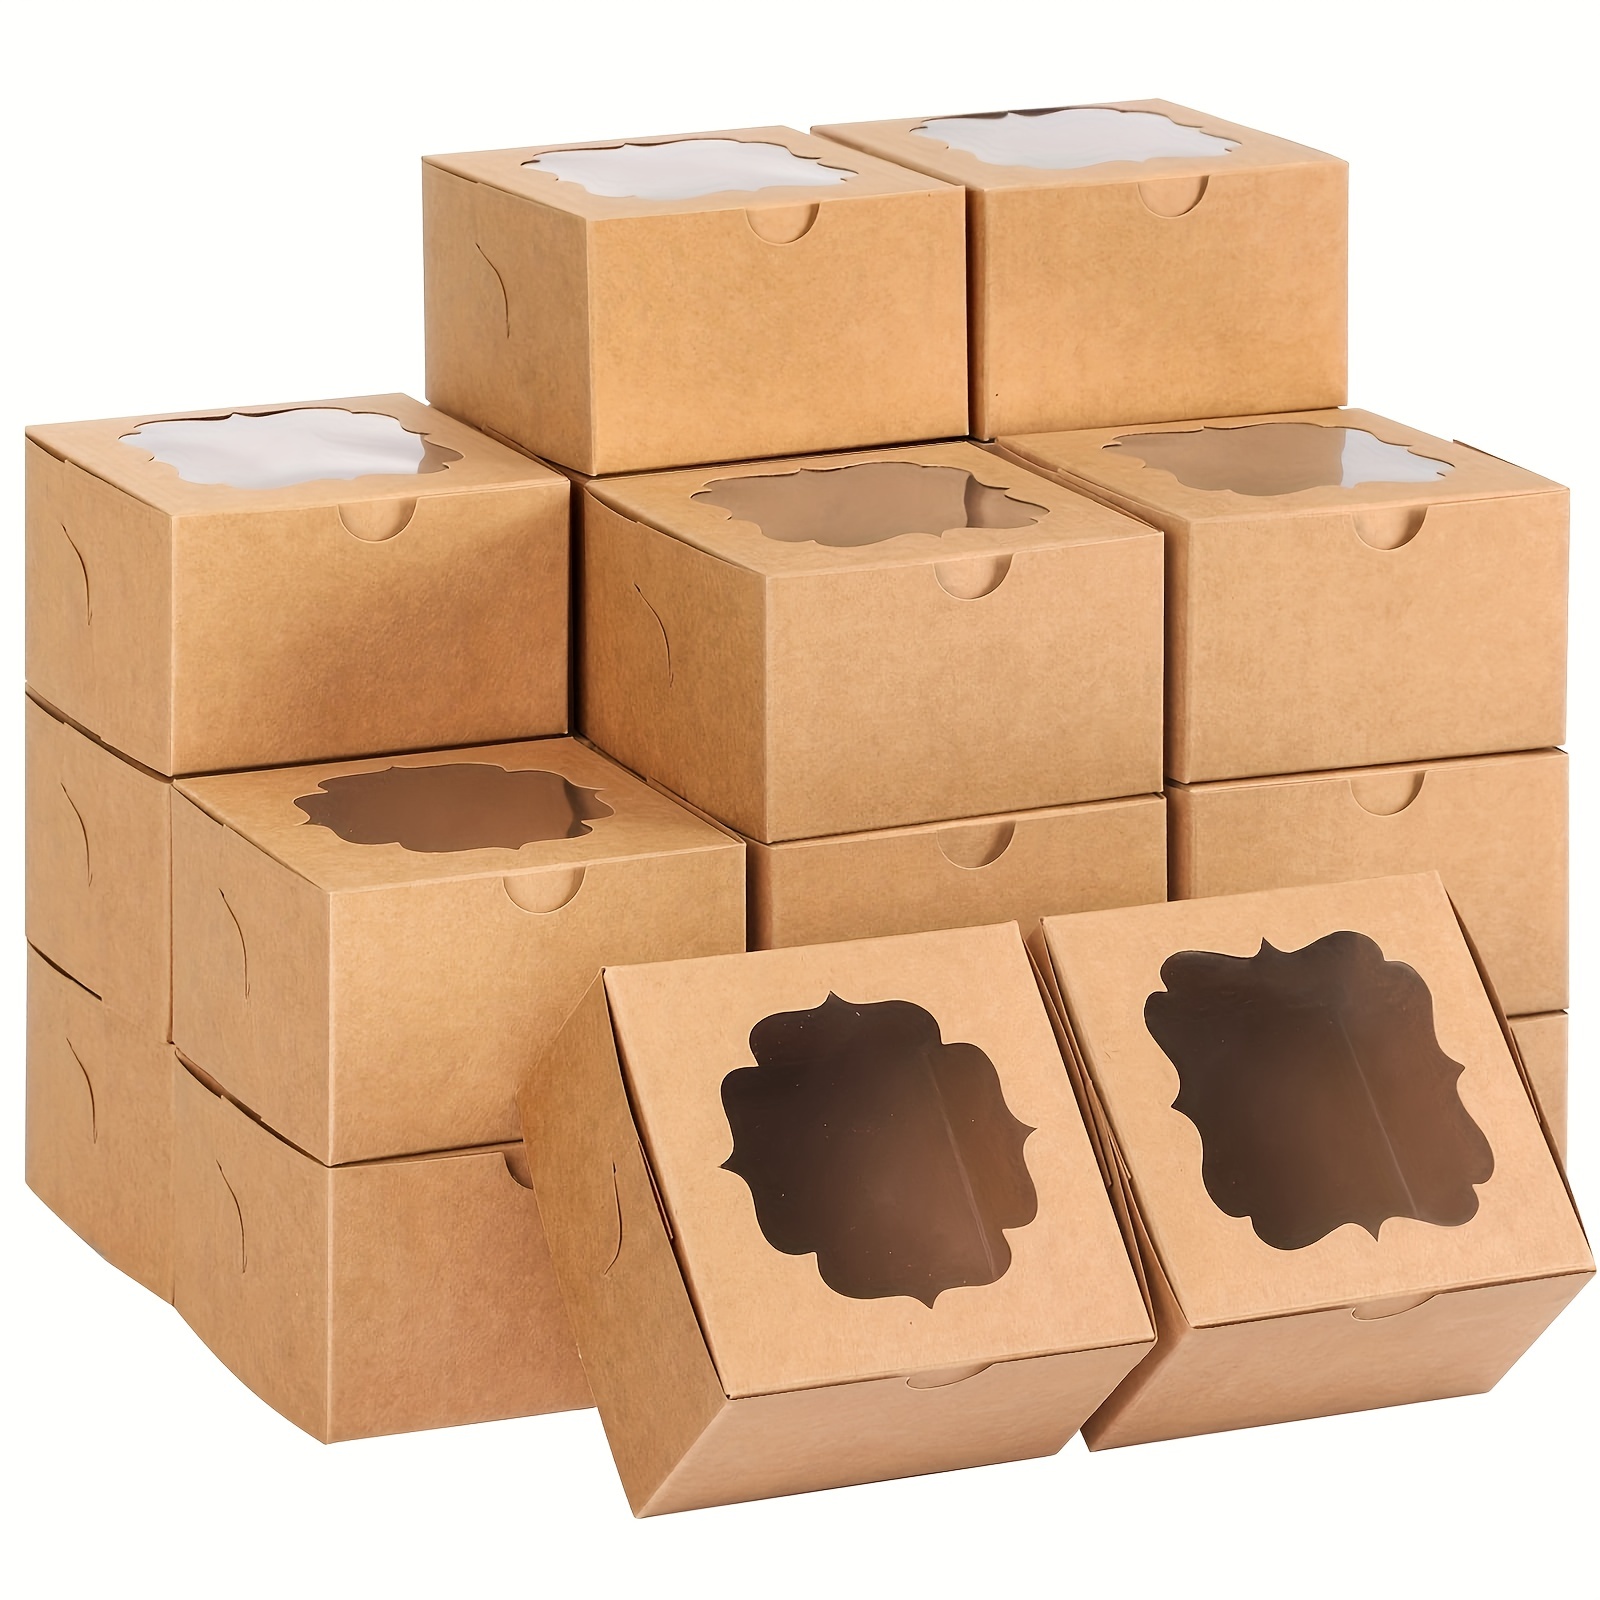 Cupcake Boxes Australia | Buy Wholesale Mini Cupcake Boxes Online